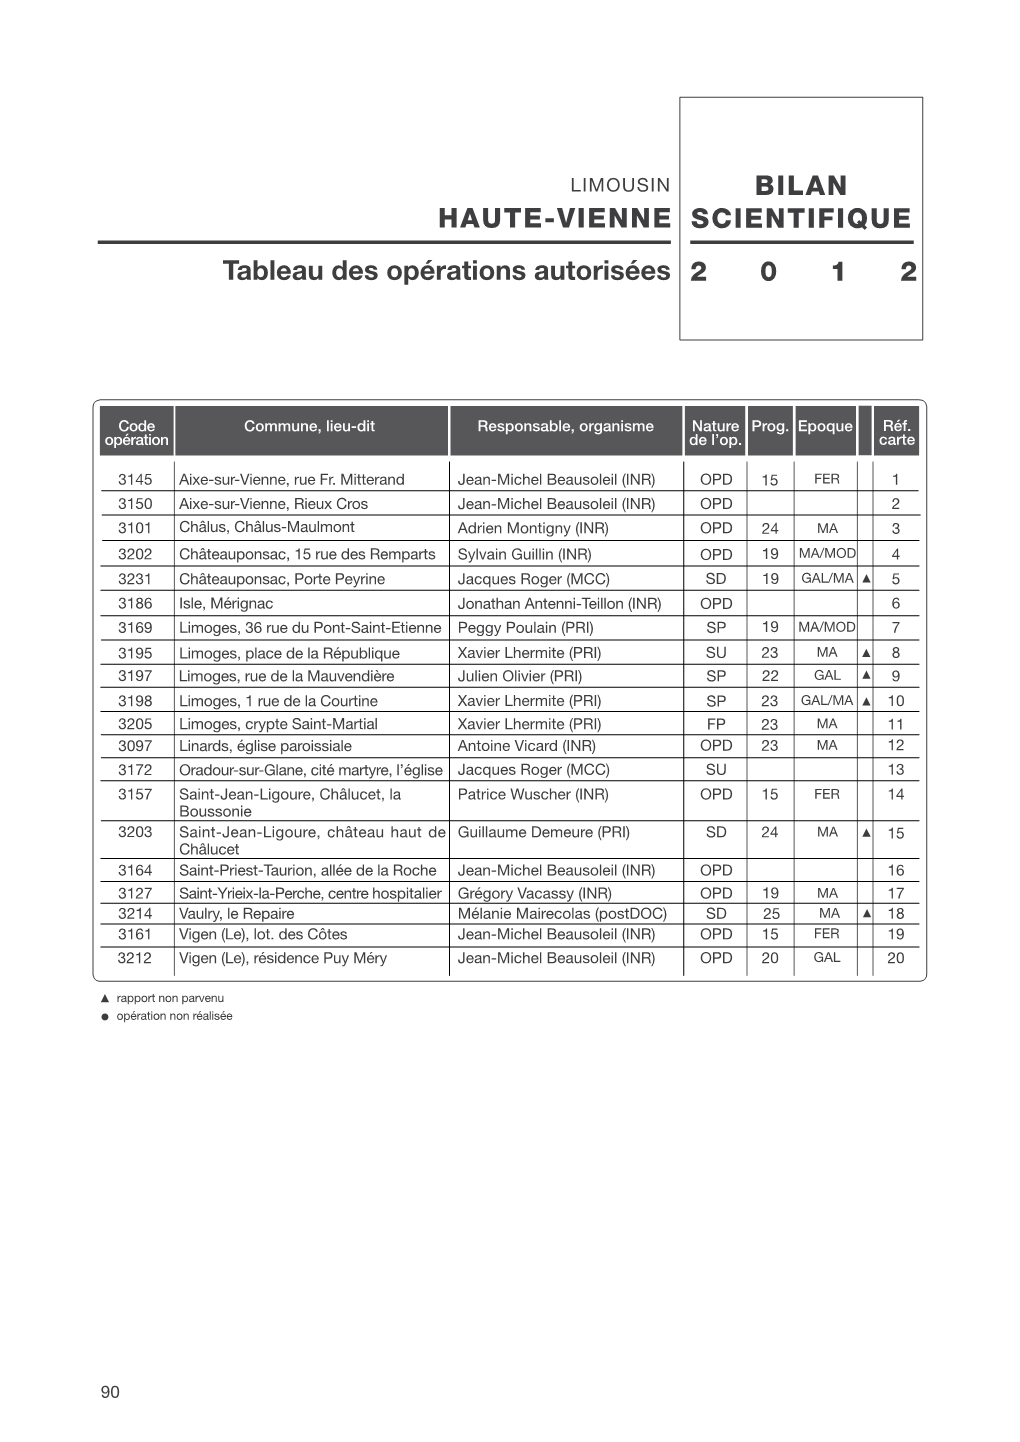 BSR 2012 Haute-Vienne PDF 7 MO